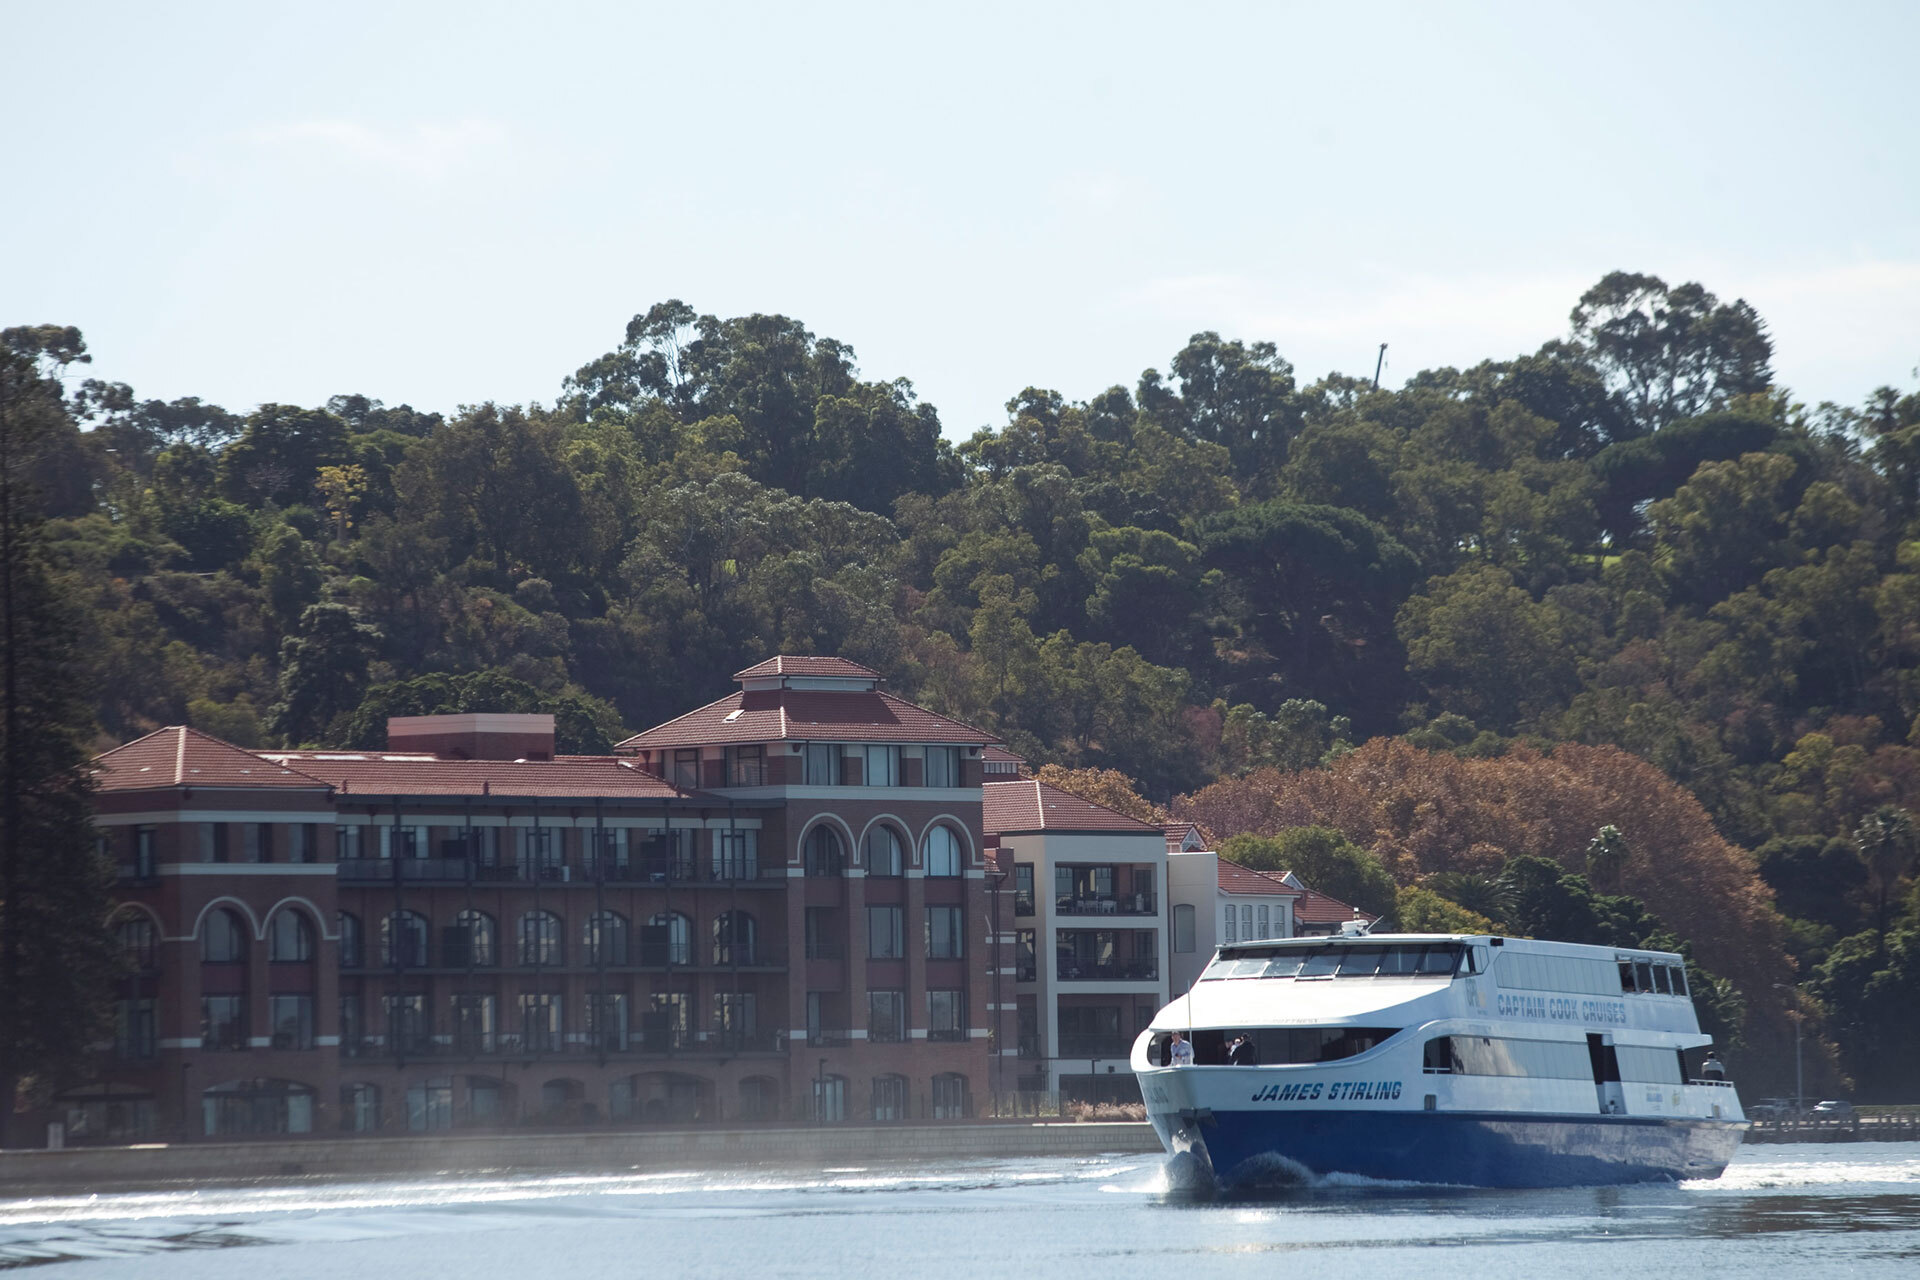 Fremantle Scenic River Cruise